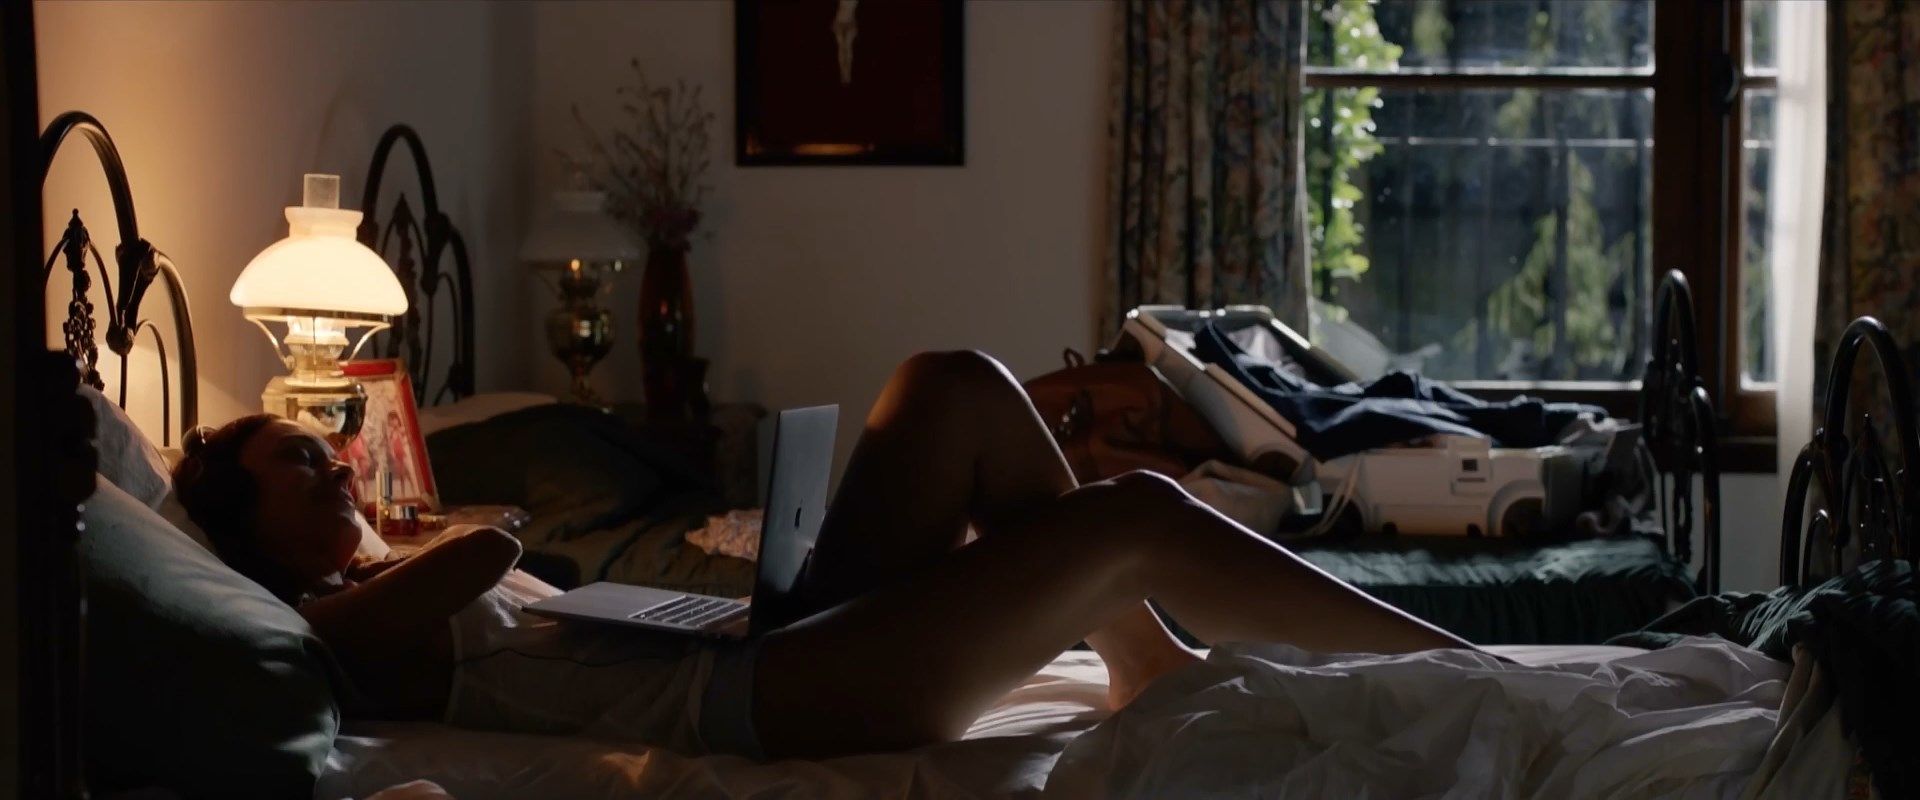 Bérénice Bejo, Martina Gusmán Nude - La quietud (29 Pics + GIFs & Video)